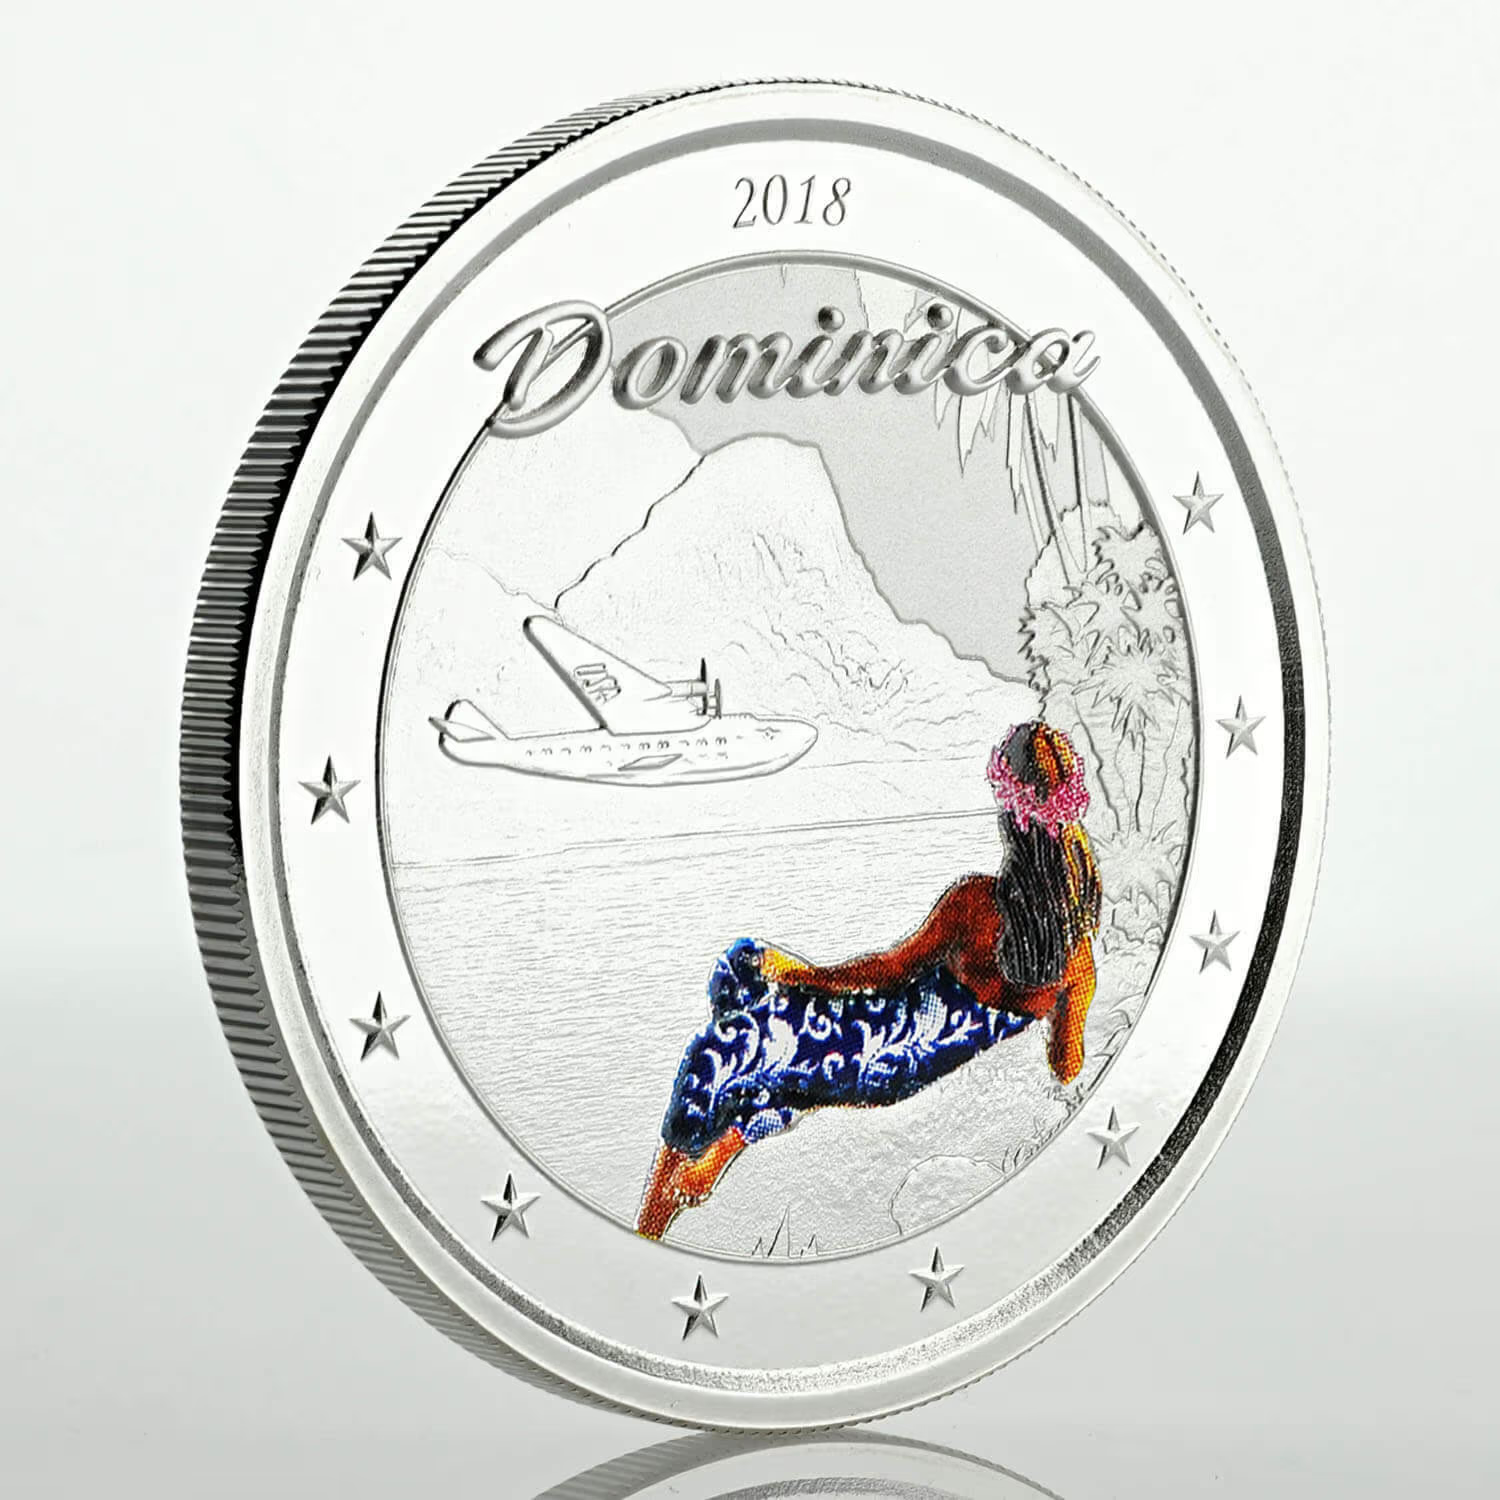 1 Oz Silver Coin 2018 Dominica $2 Scottsdale Mint Color Proof - The Nature Isle-classypw.com-1